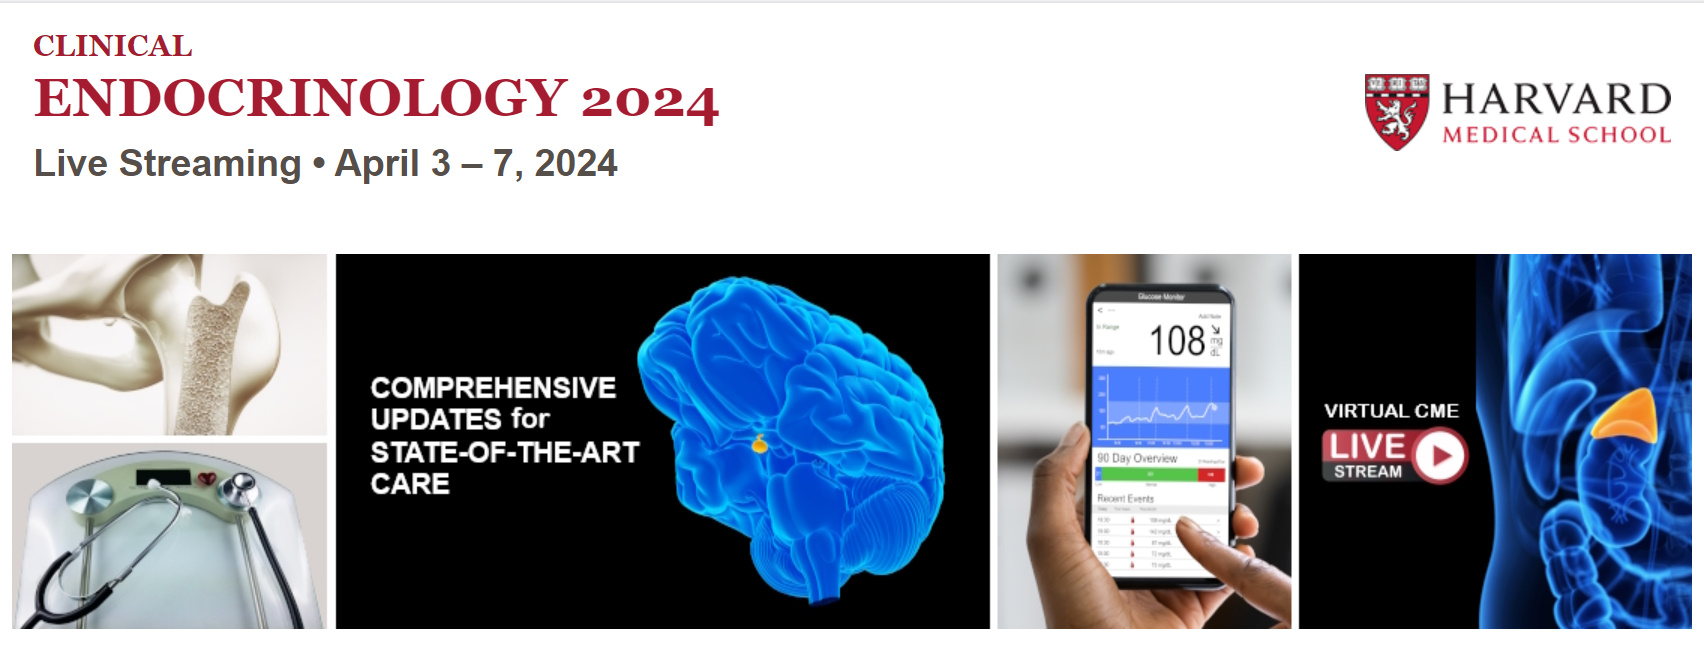 Harvard Medical School Clinical Endocrinology 2024